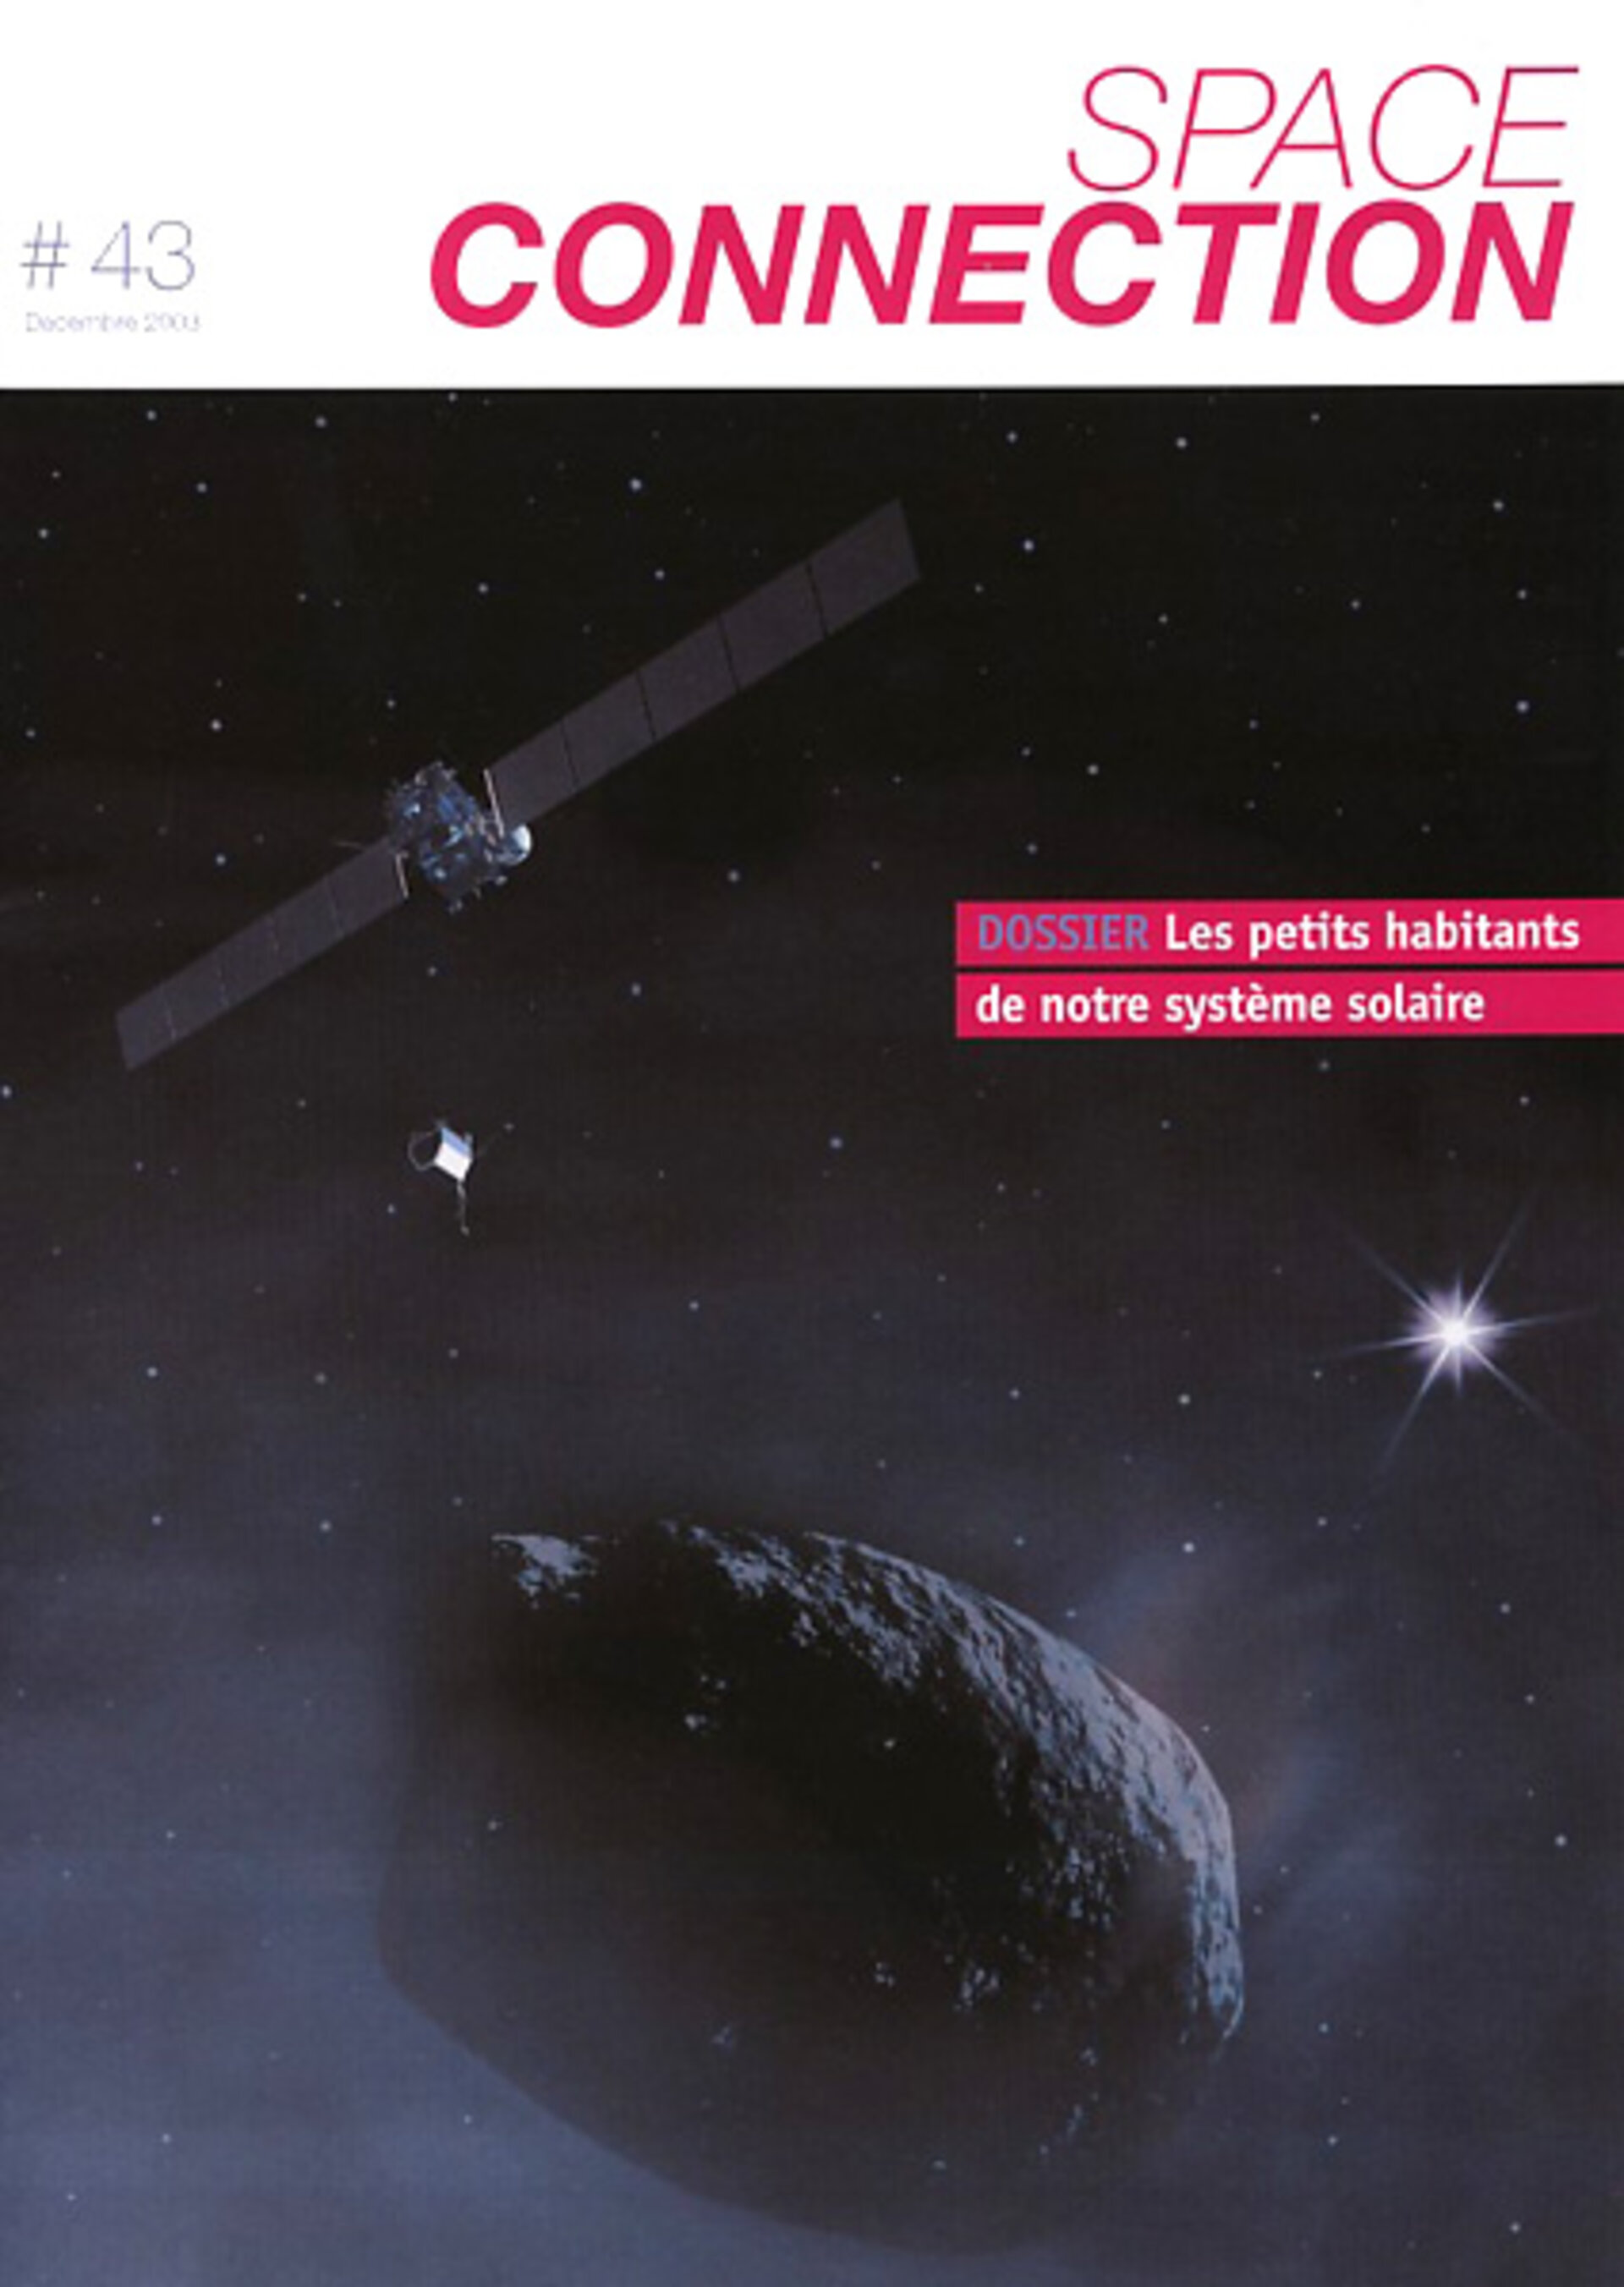 Space Connection pour Mission Rosetta